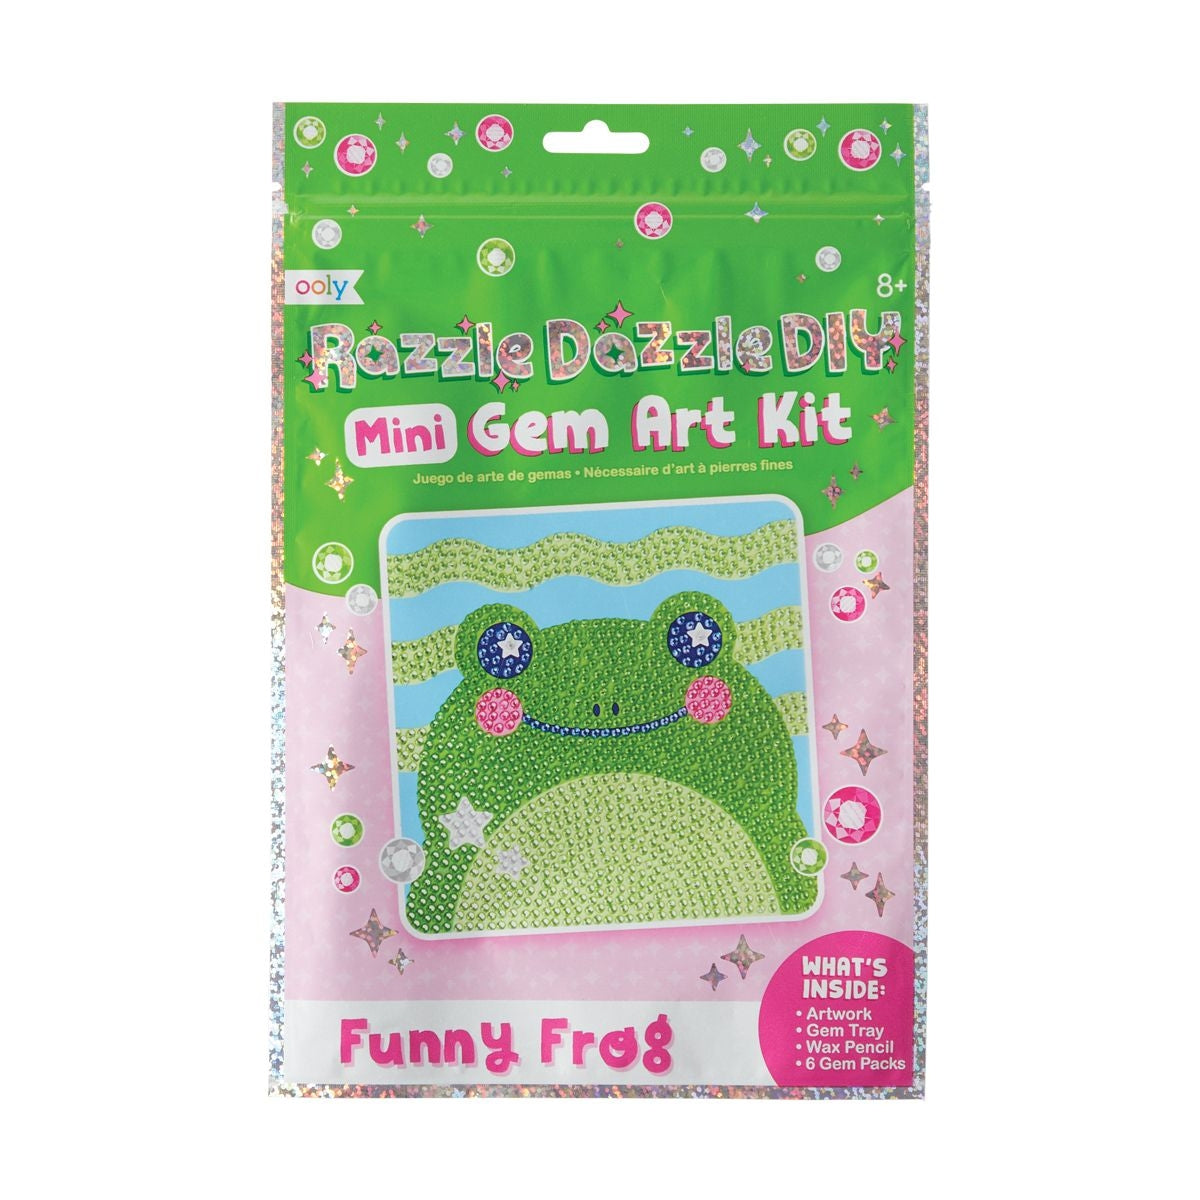 "Funny Frog" Razzle Dazzle DIY Mini Gem Art Kit